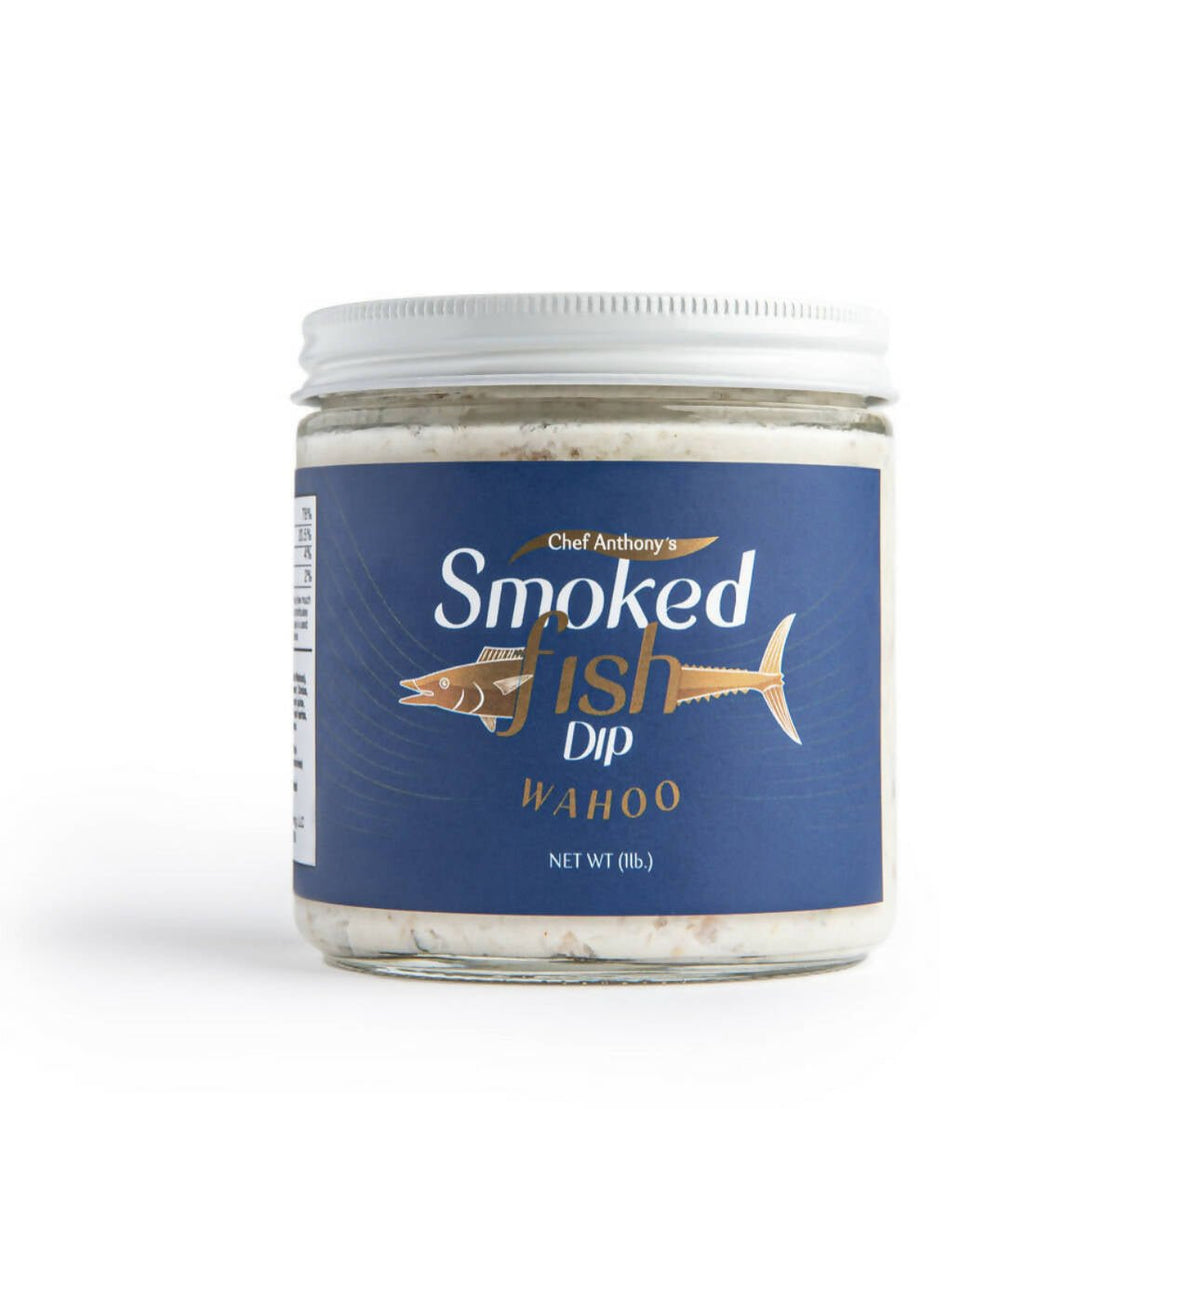 Chef Anthony’s Smoked Fish Dip Jars - 6 jars x 1 LB by Farm2Me